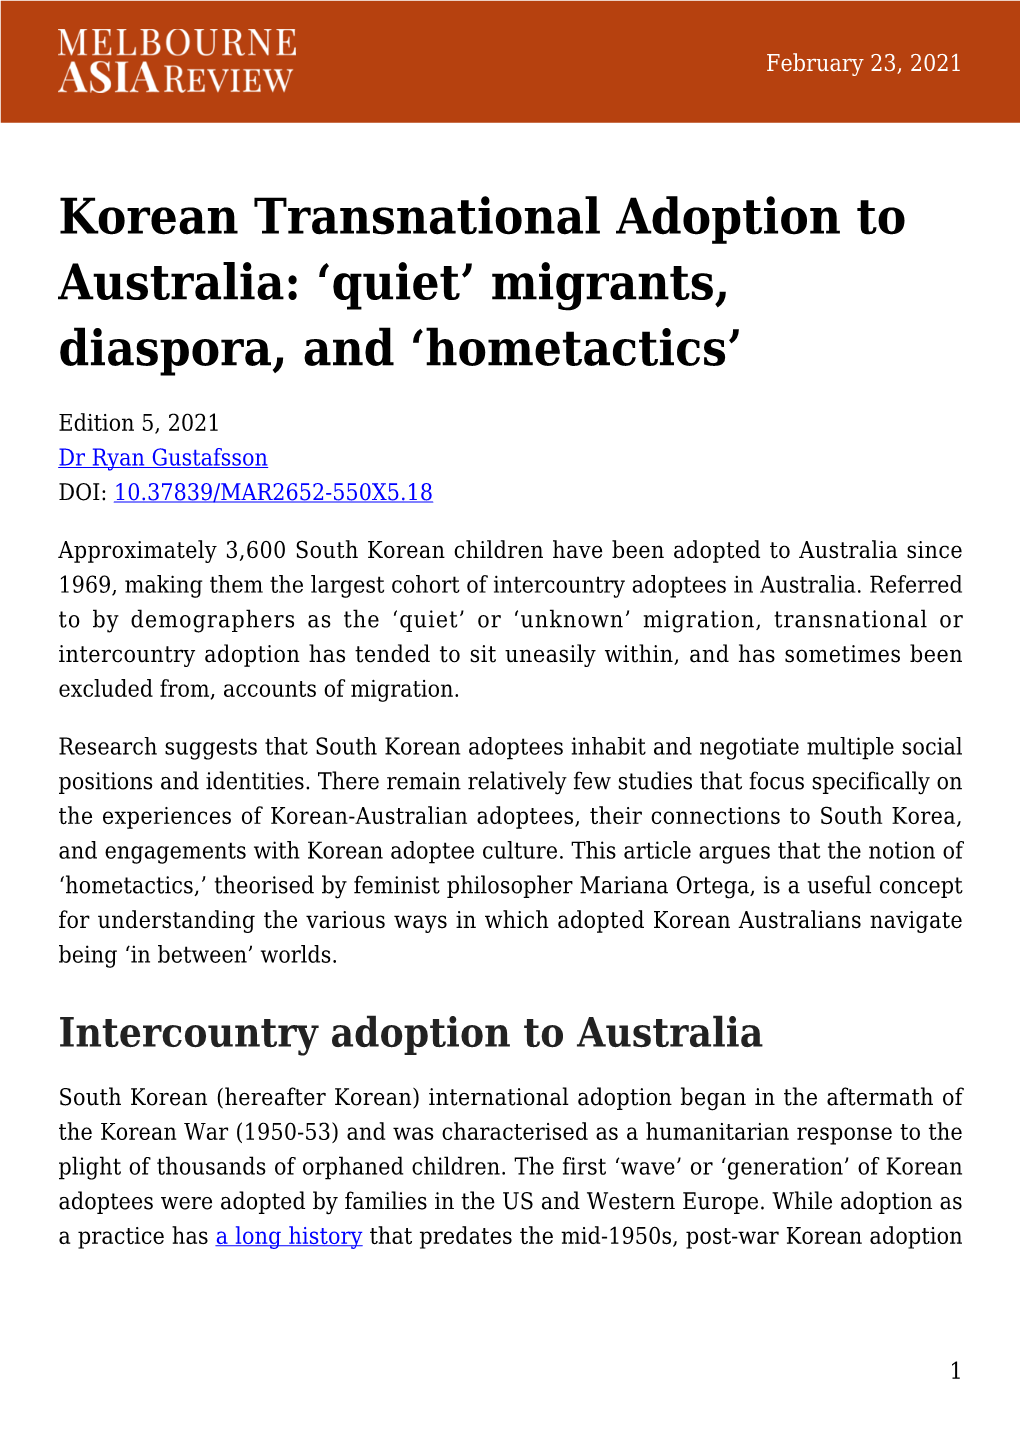 Korean Transnational Adoption to Australia: 'Quiet' Migrants, Diaspora